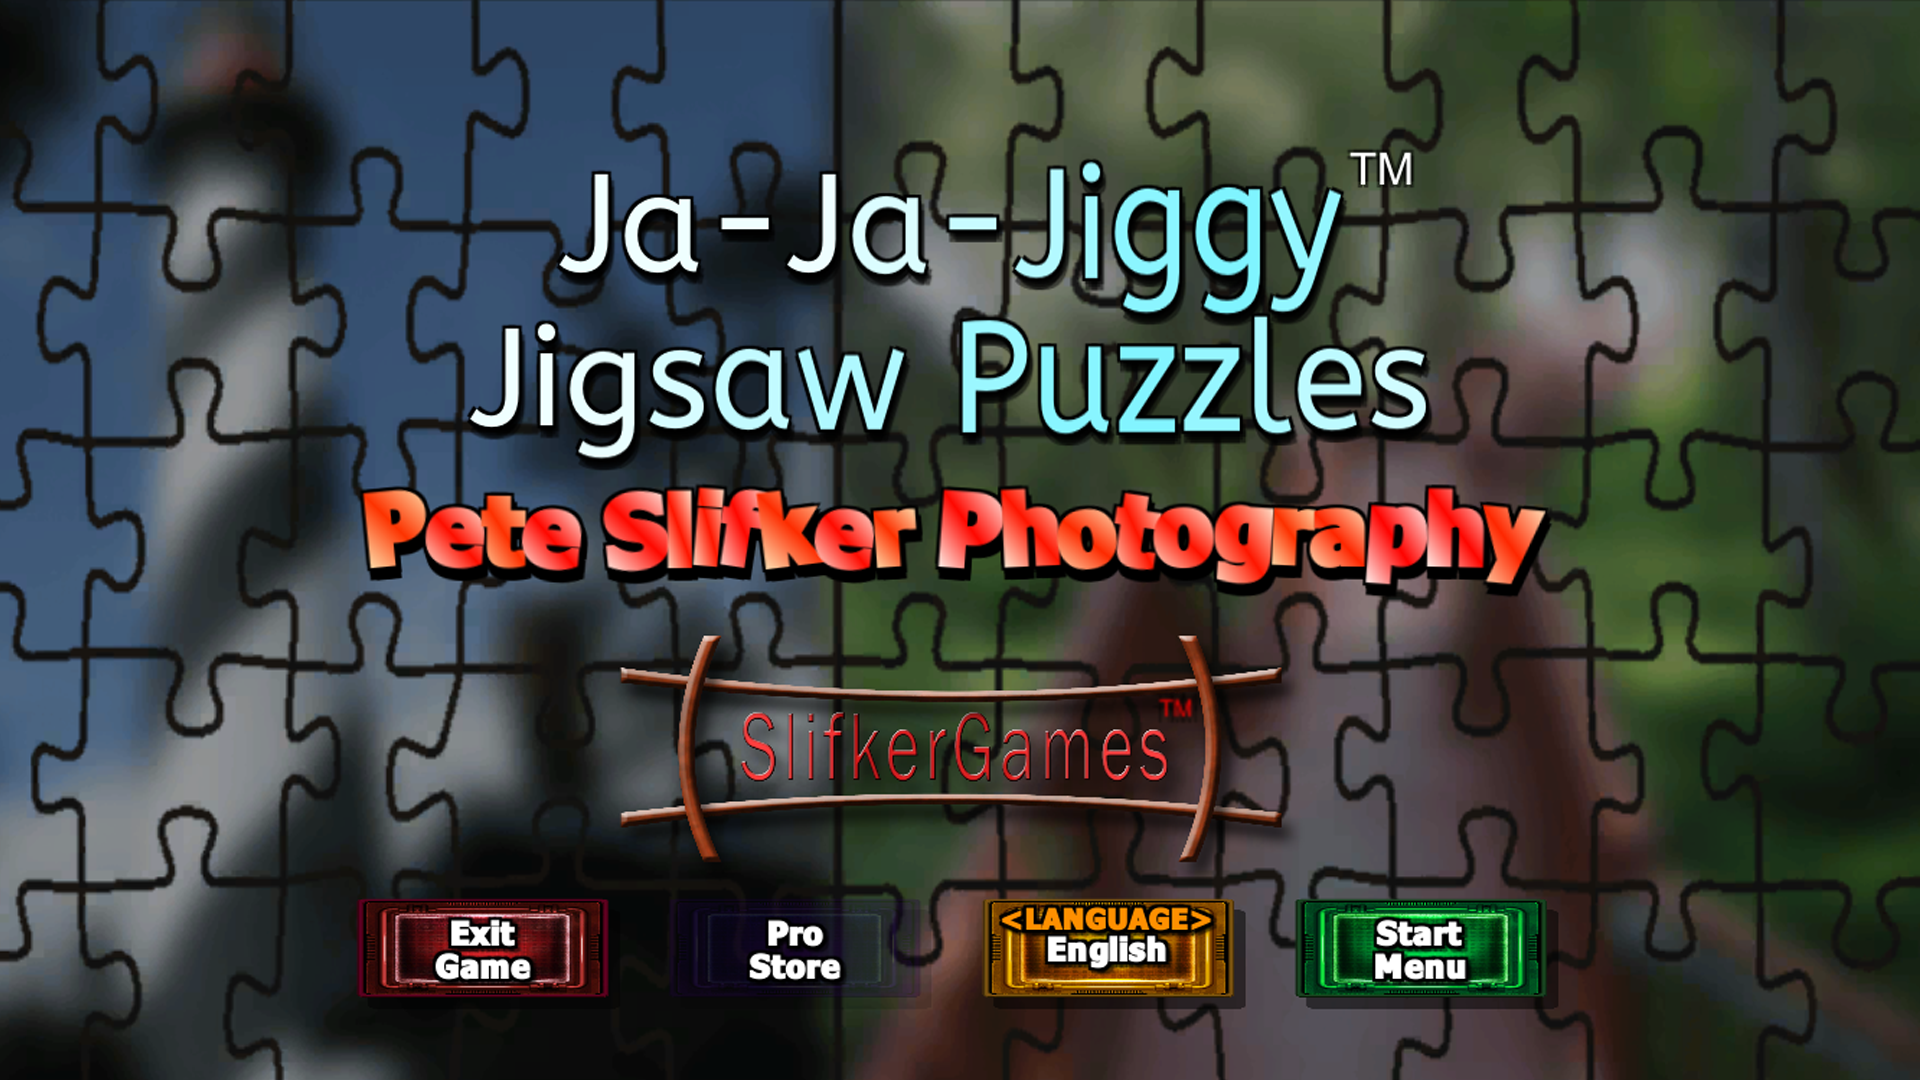 Study Whatty: Ja-Ja-Jiggy Jigsaw Puzzles (Picture 1)